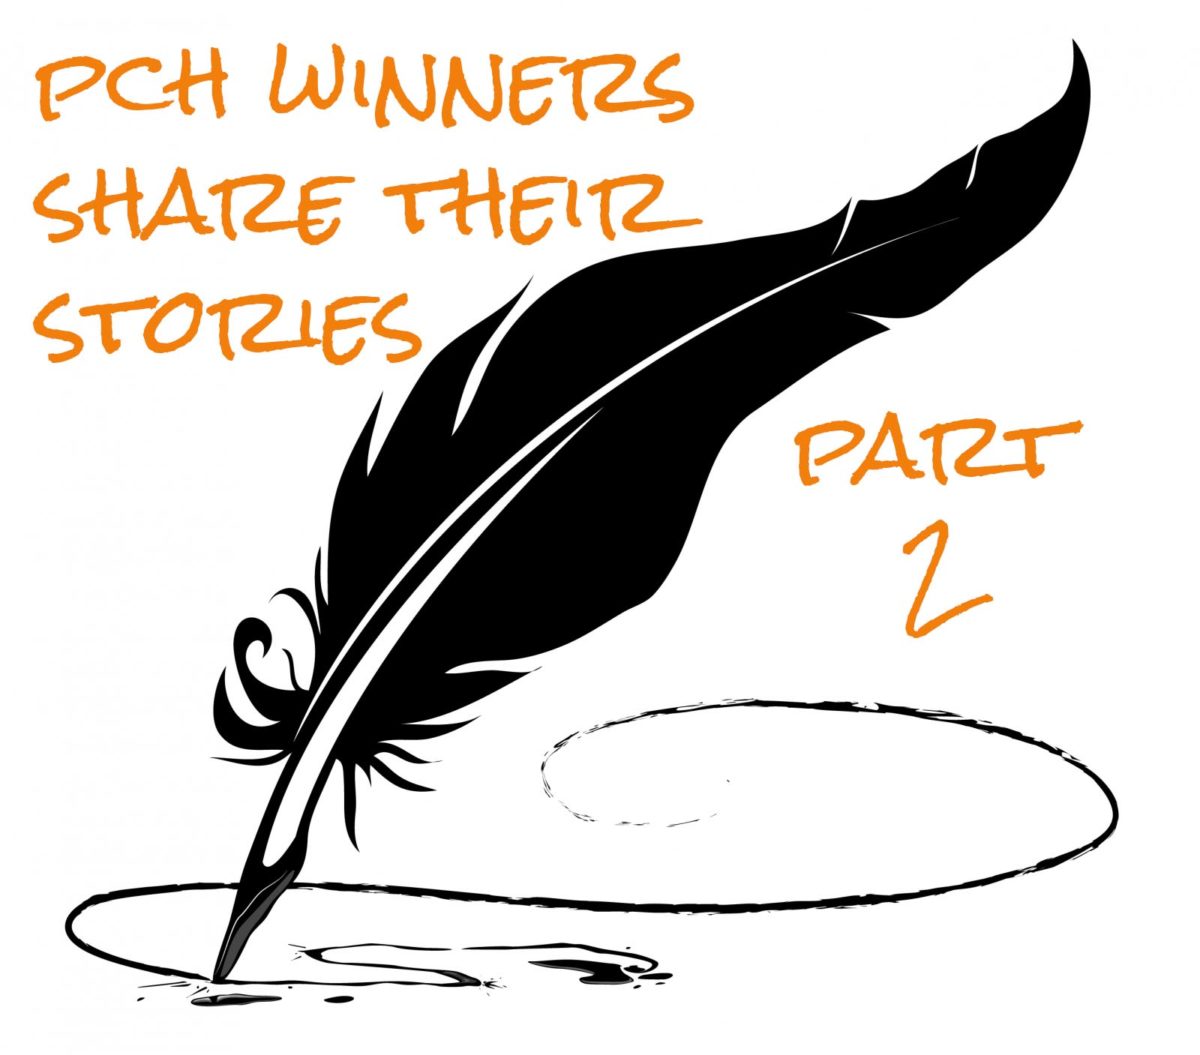 #WinnerWednesday: PCH Winners Share Their Stories Part 2